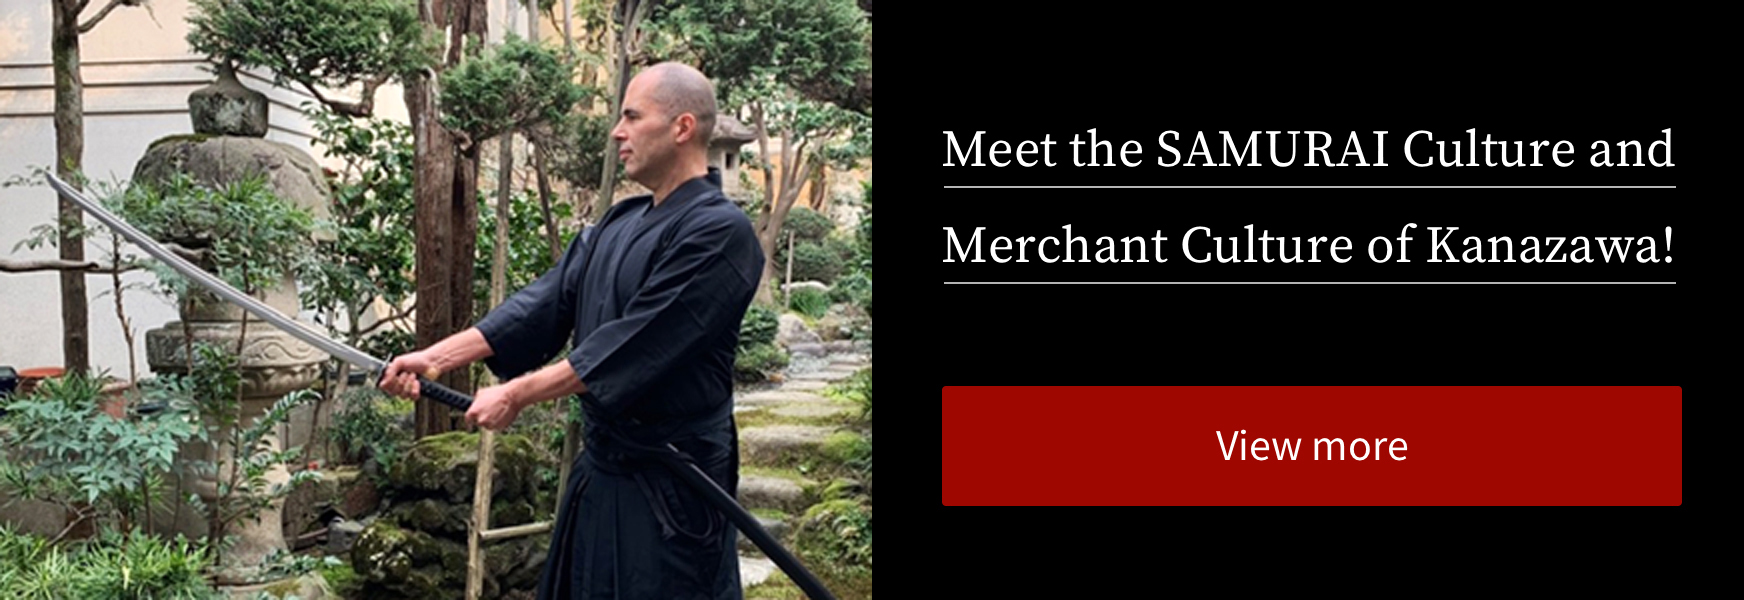 Meet the SAMURAI Culture and Merchant Culture of Kanazawa!